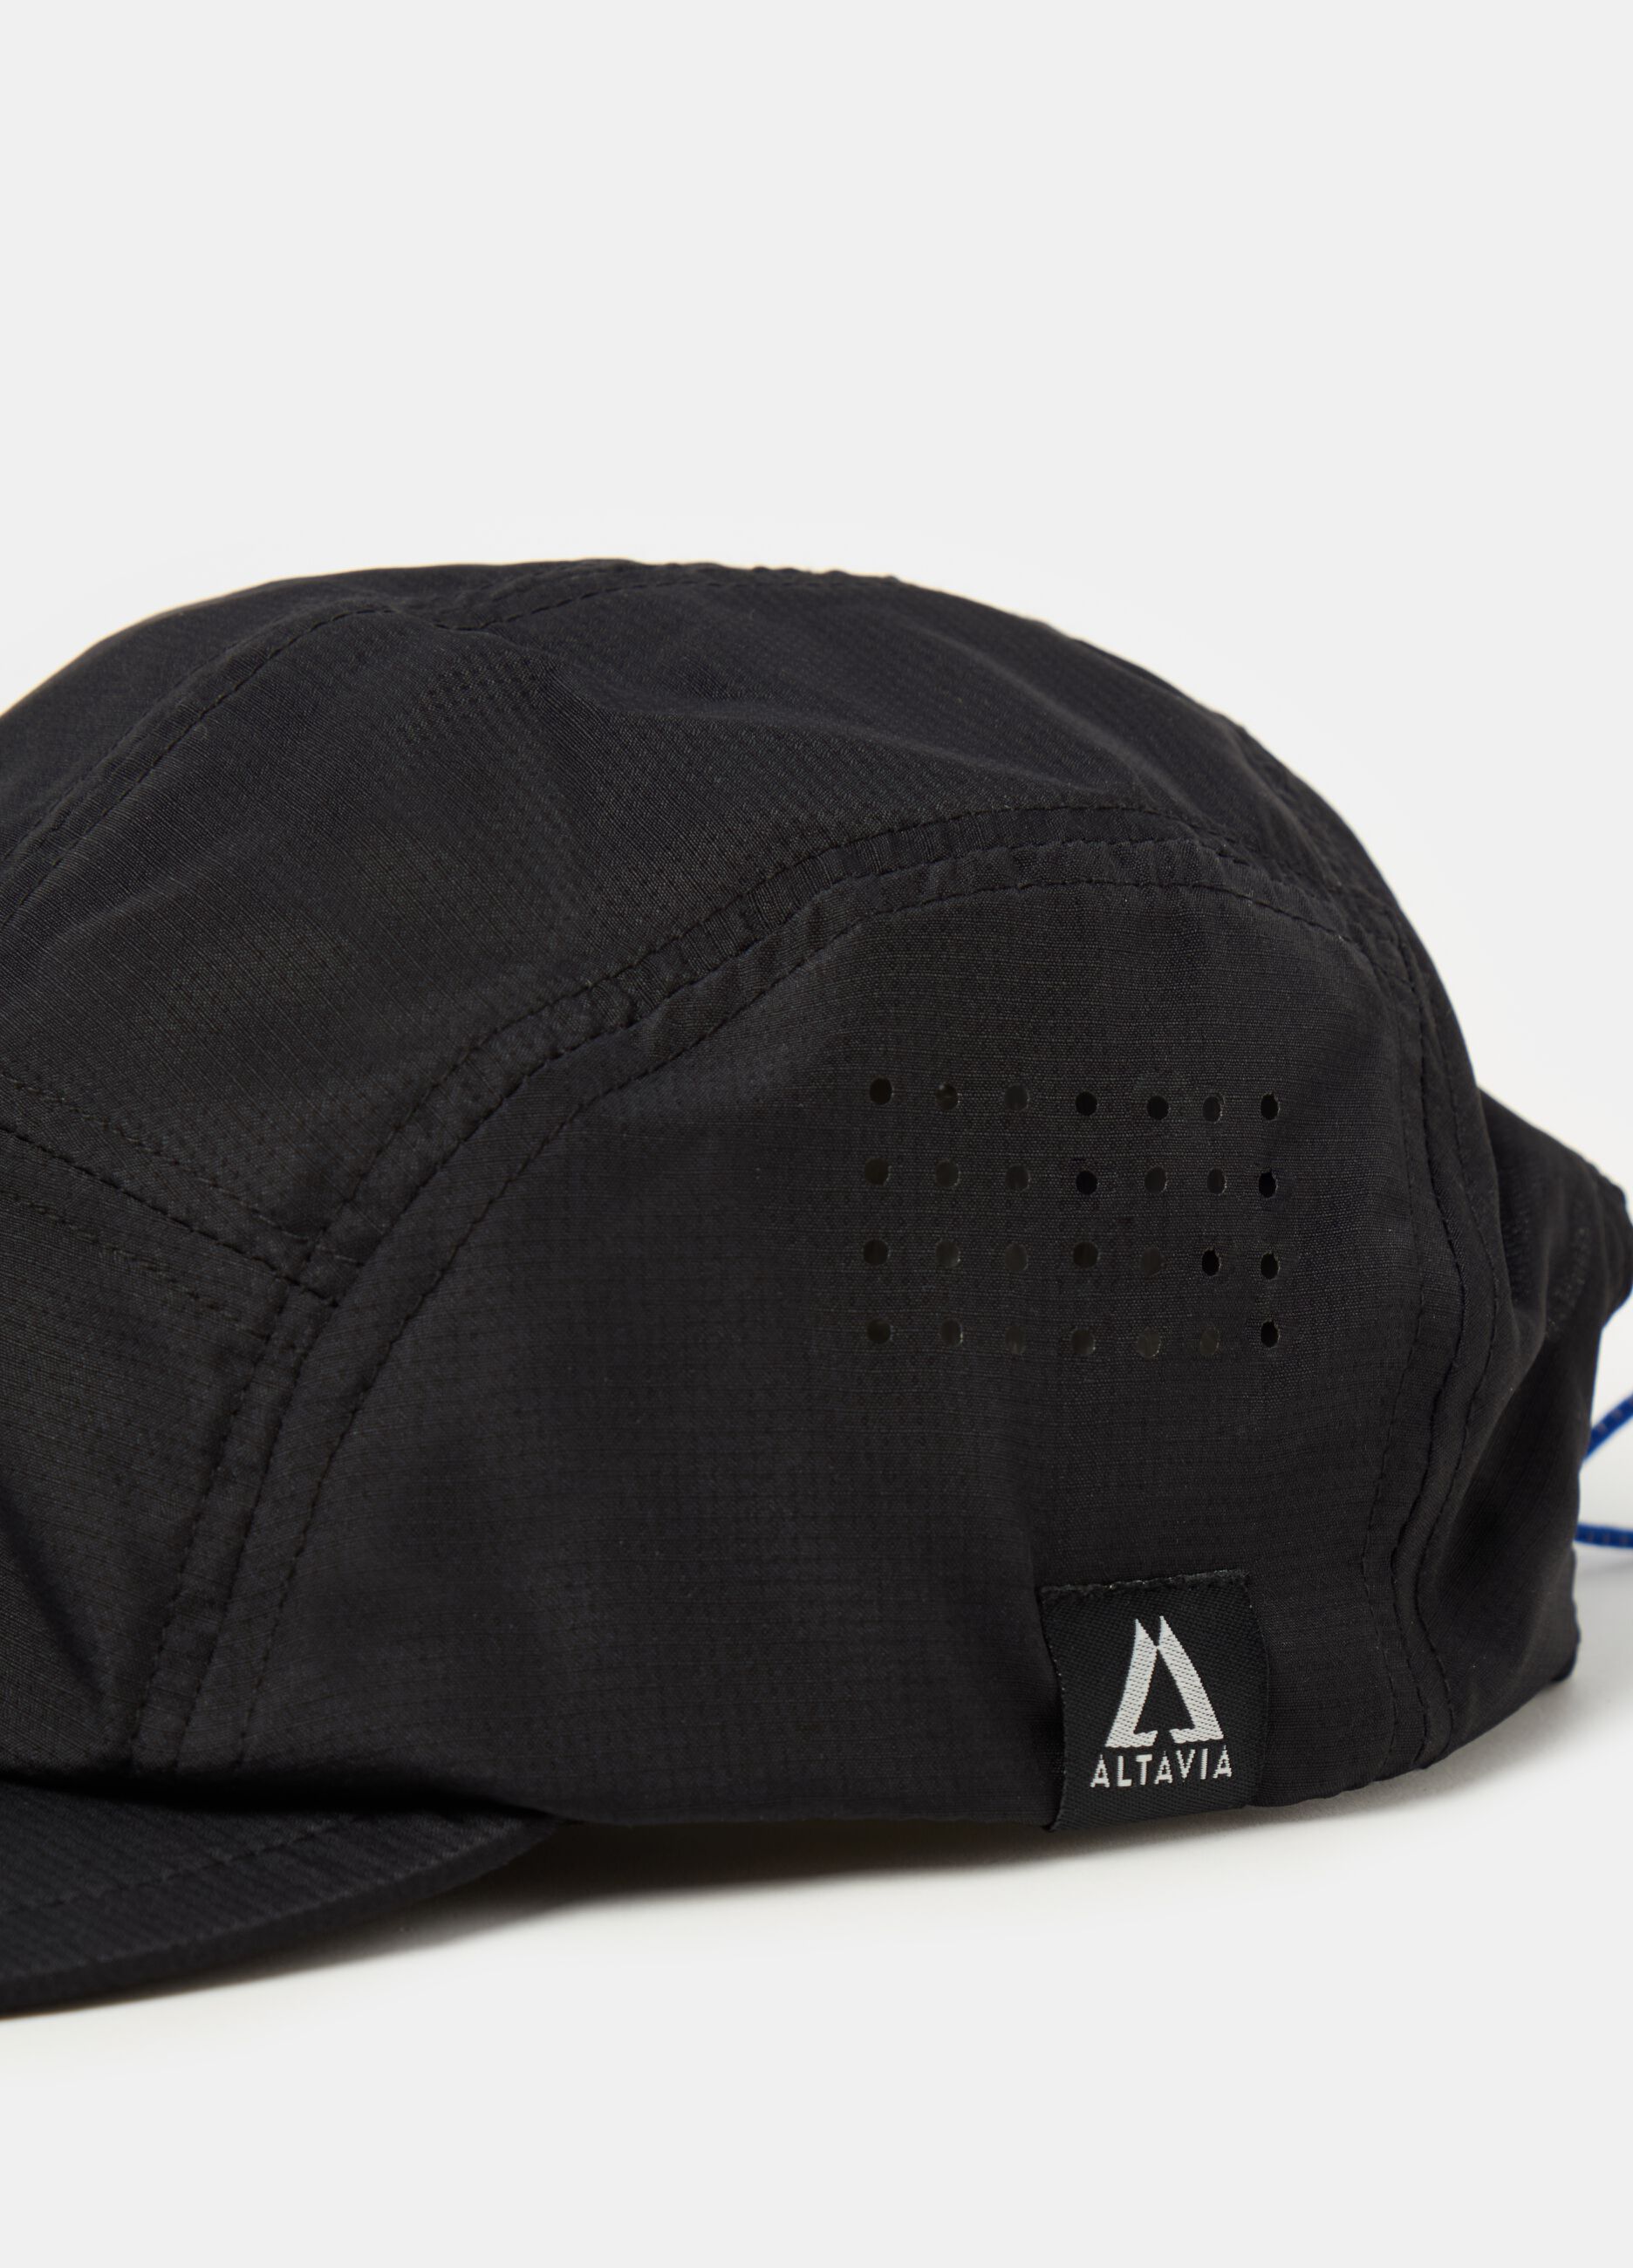 Altavia quick-dry baseball cap